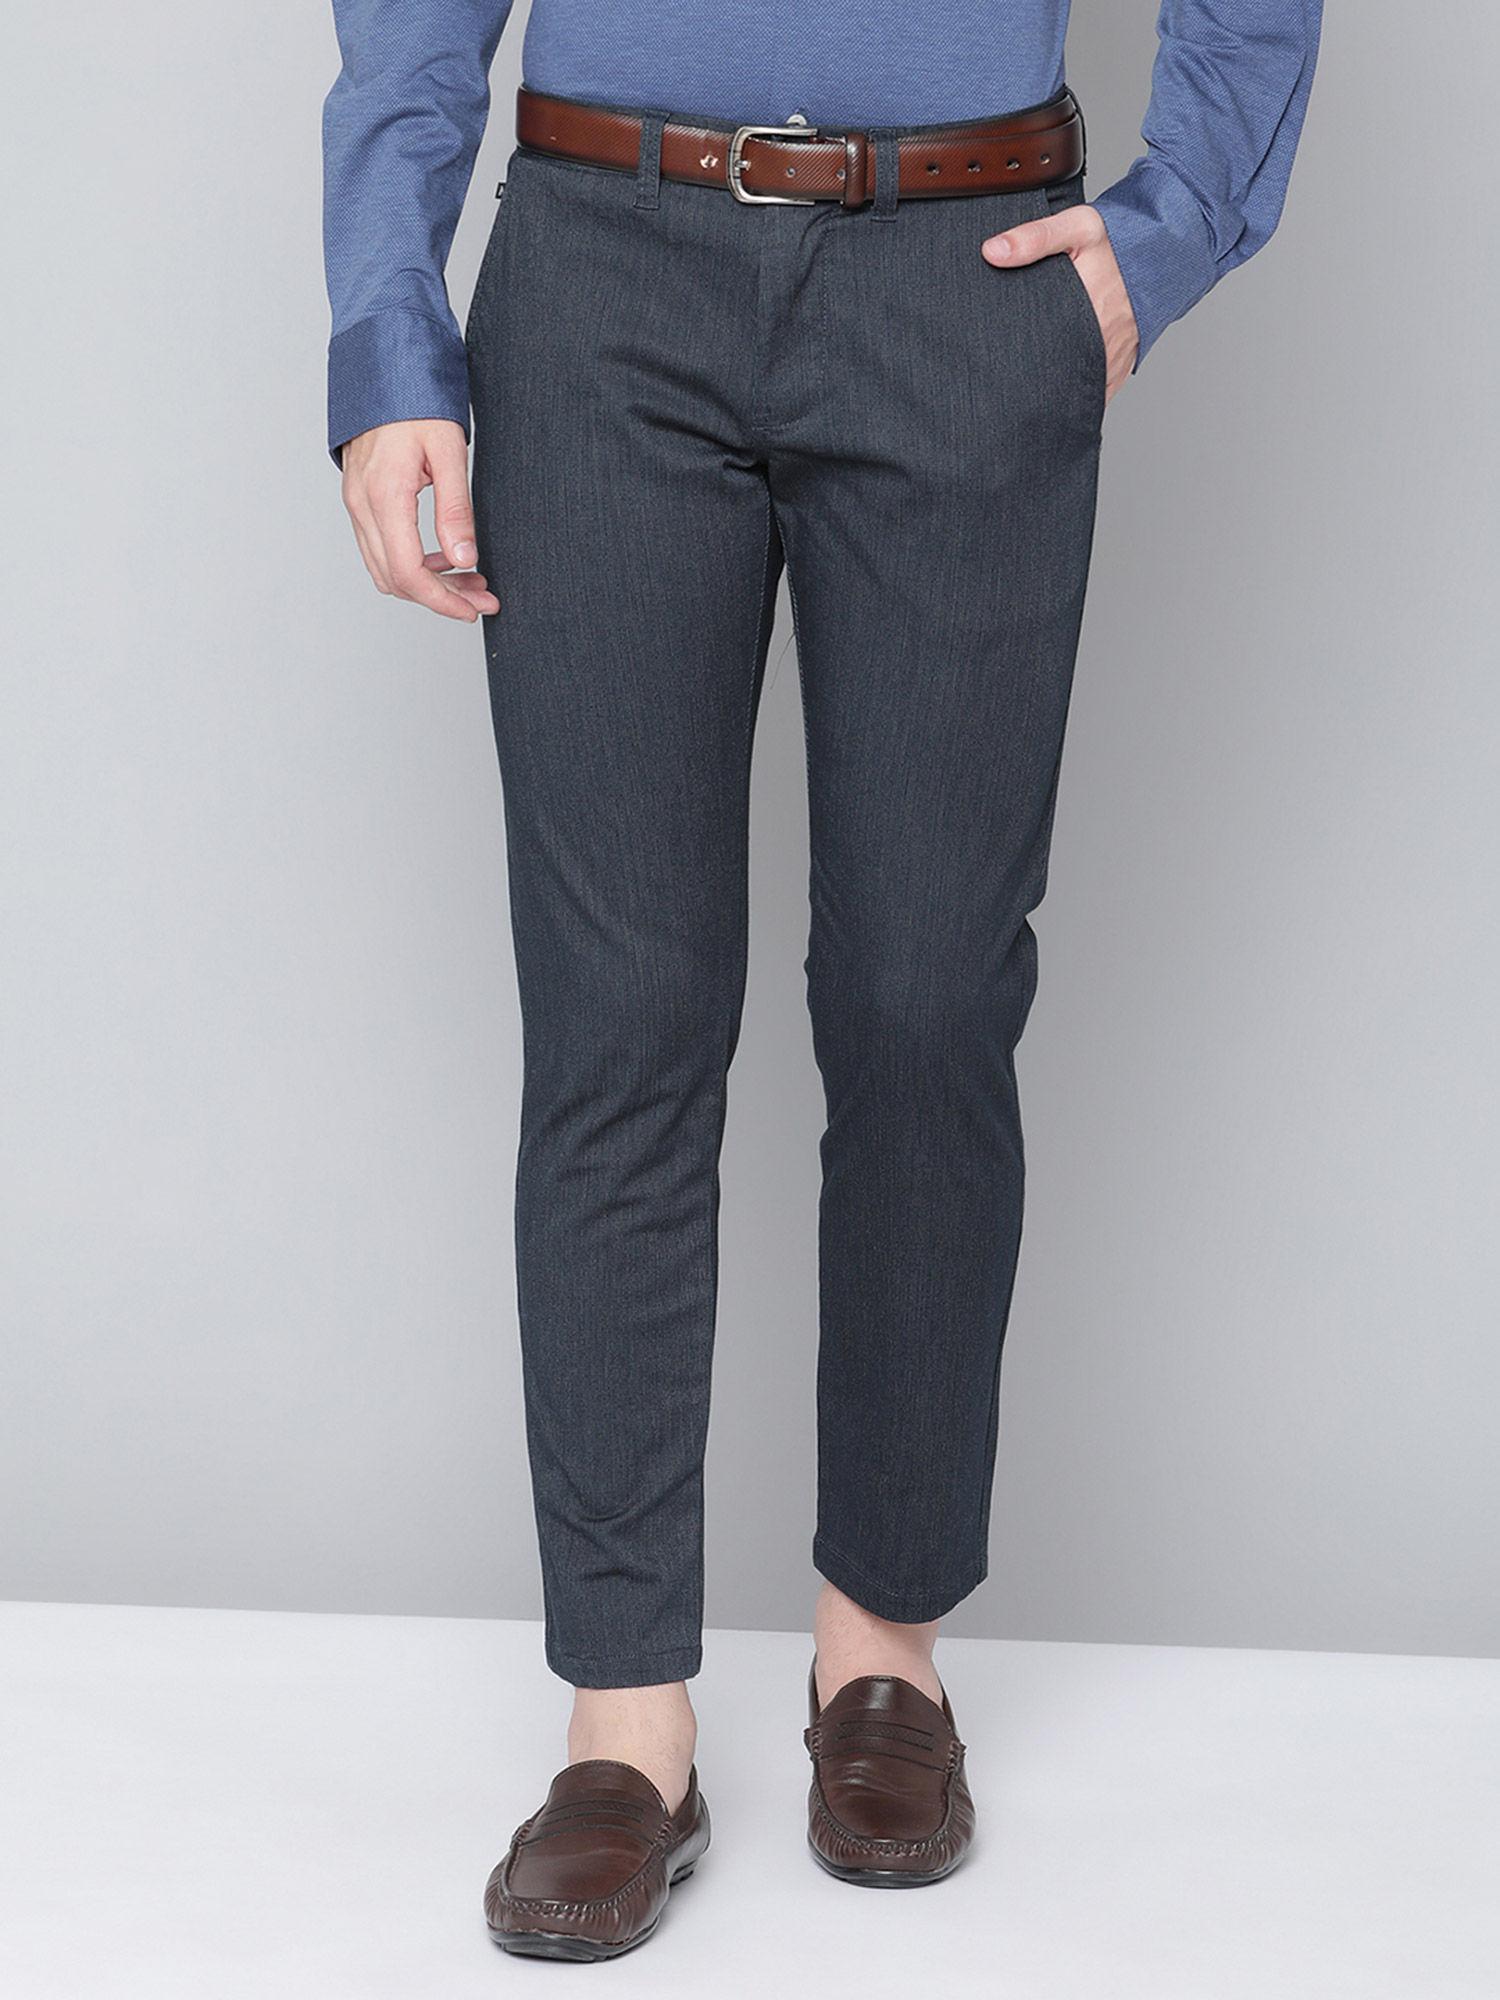 dark navy blue solid regular fit trouser